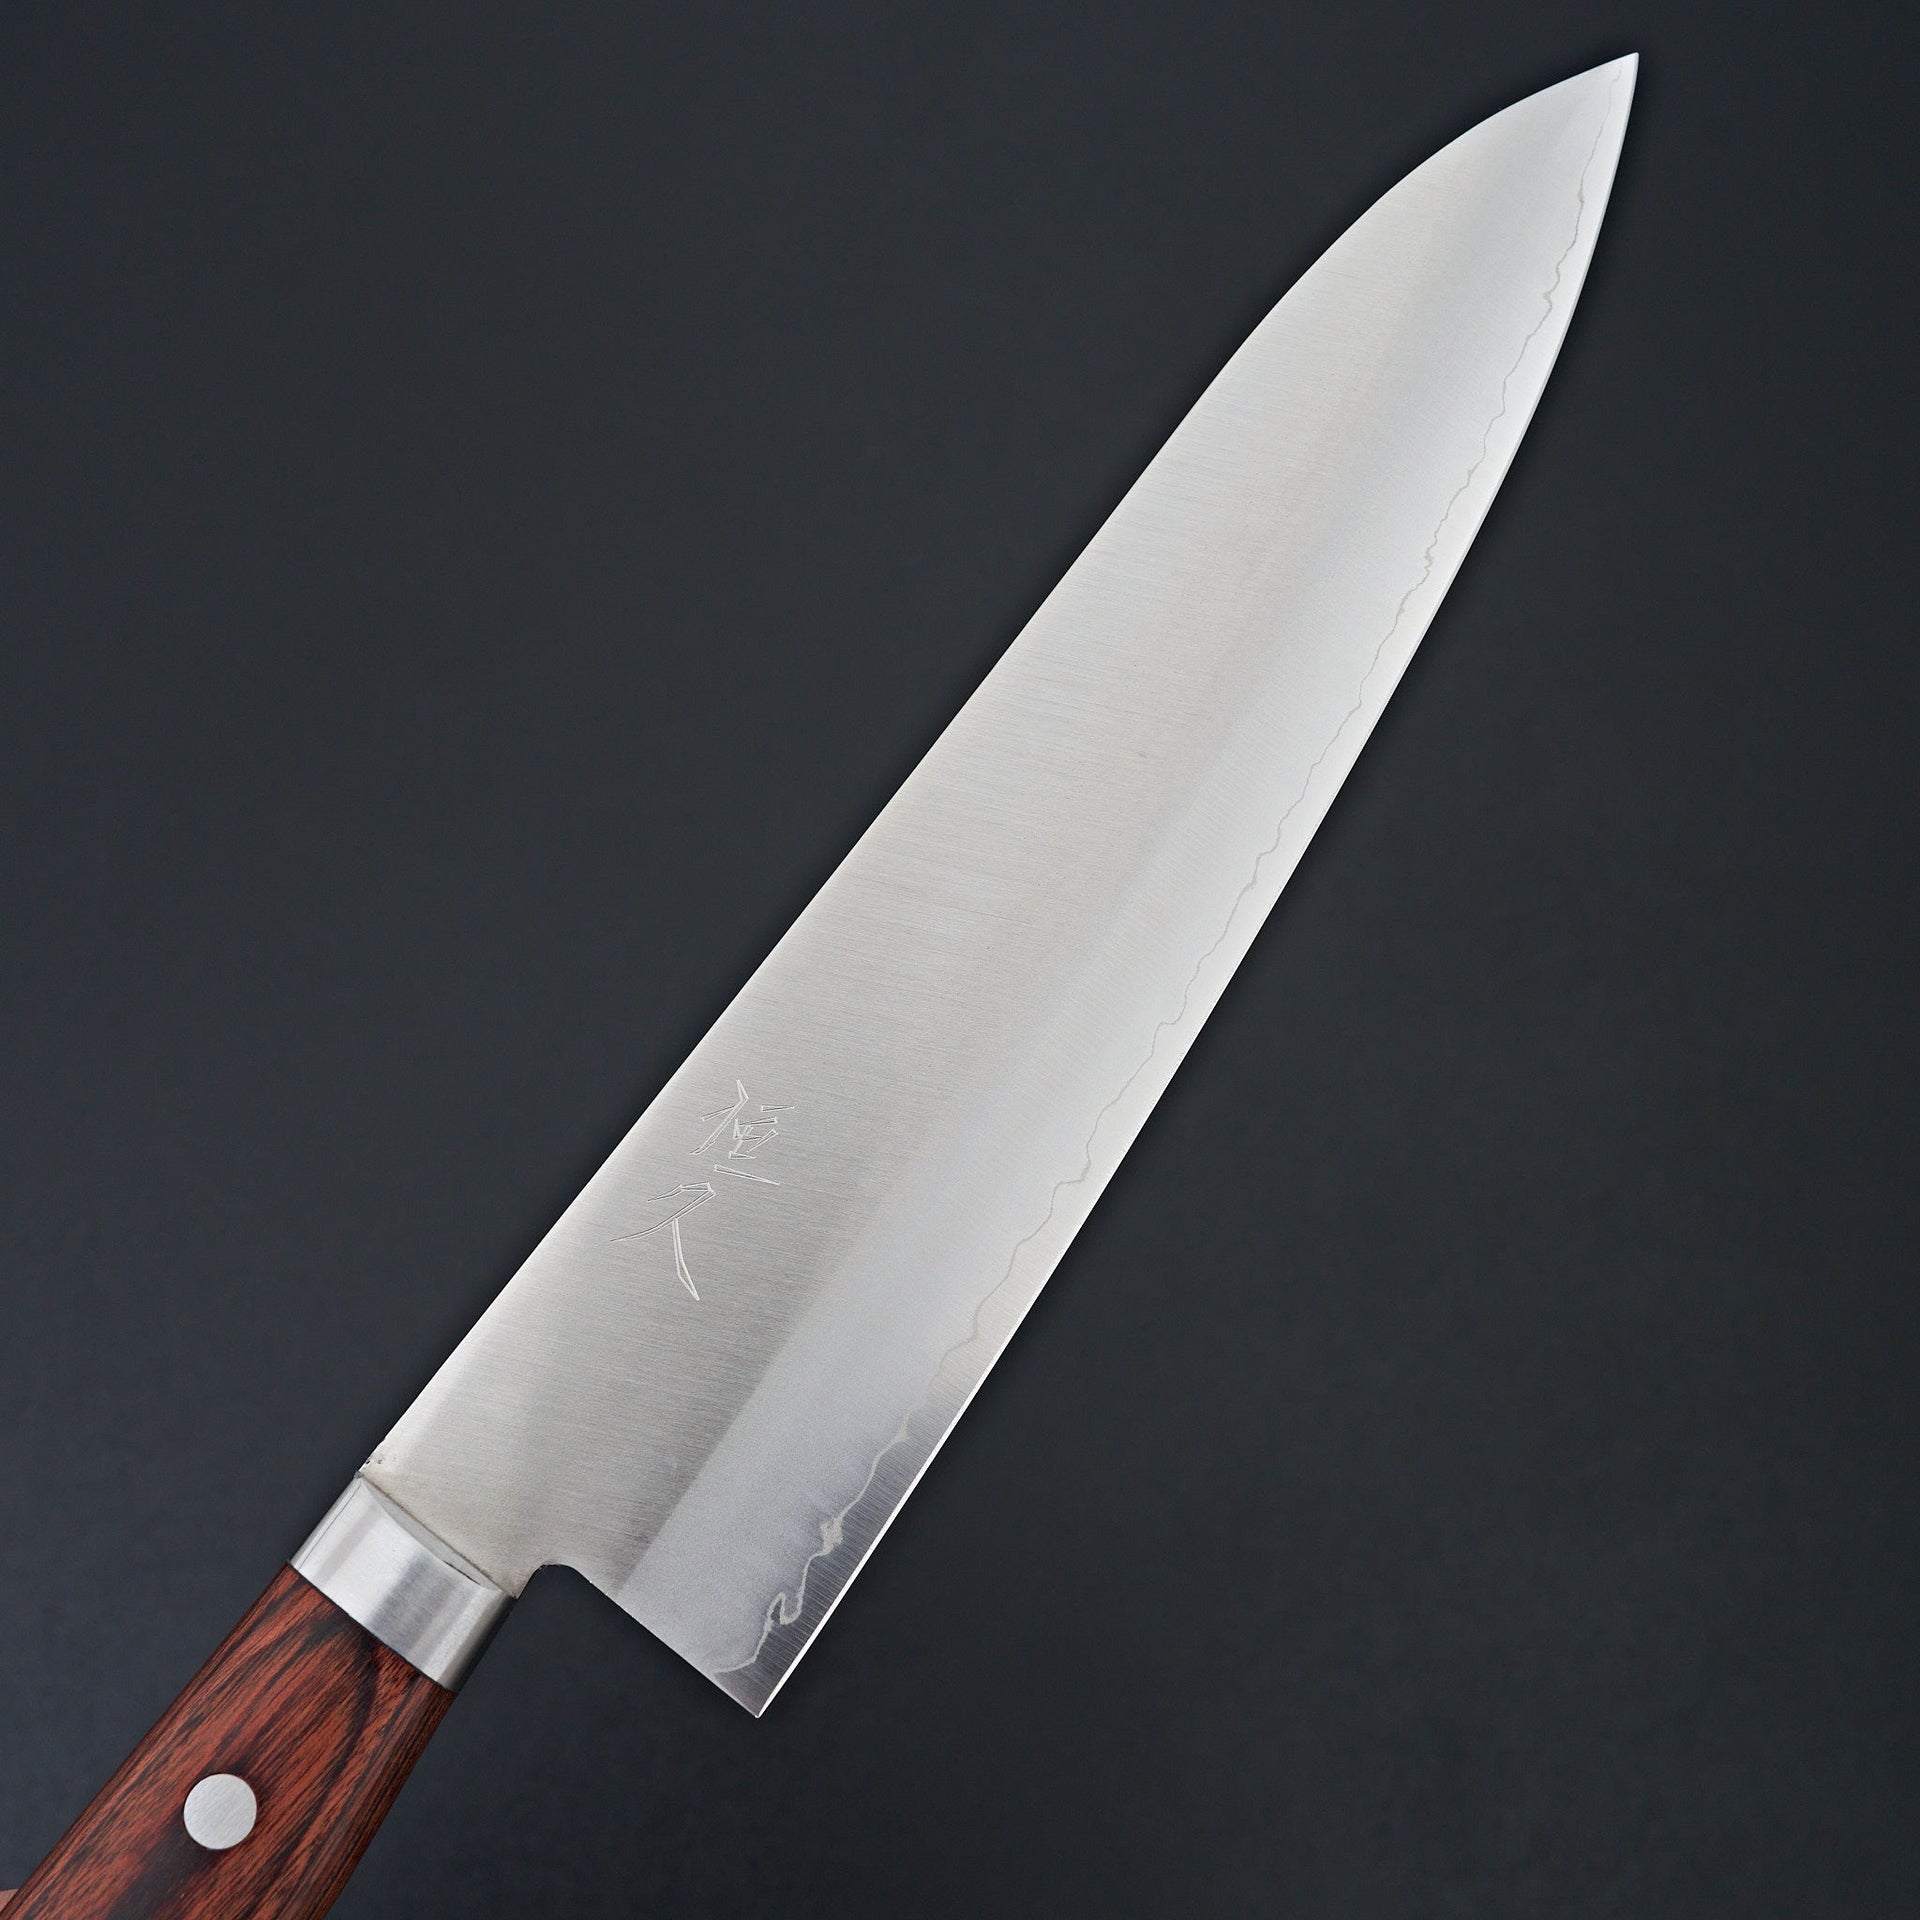 Tsunehisa V1 Gyuto 210mm-Knife-Tsunehisa-Carbon Knife Co